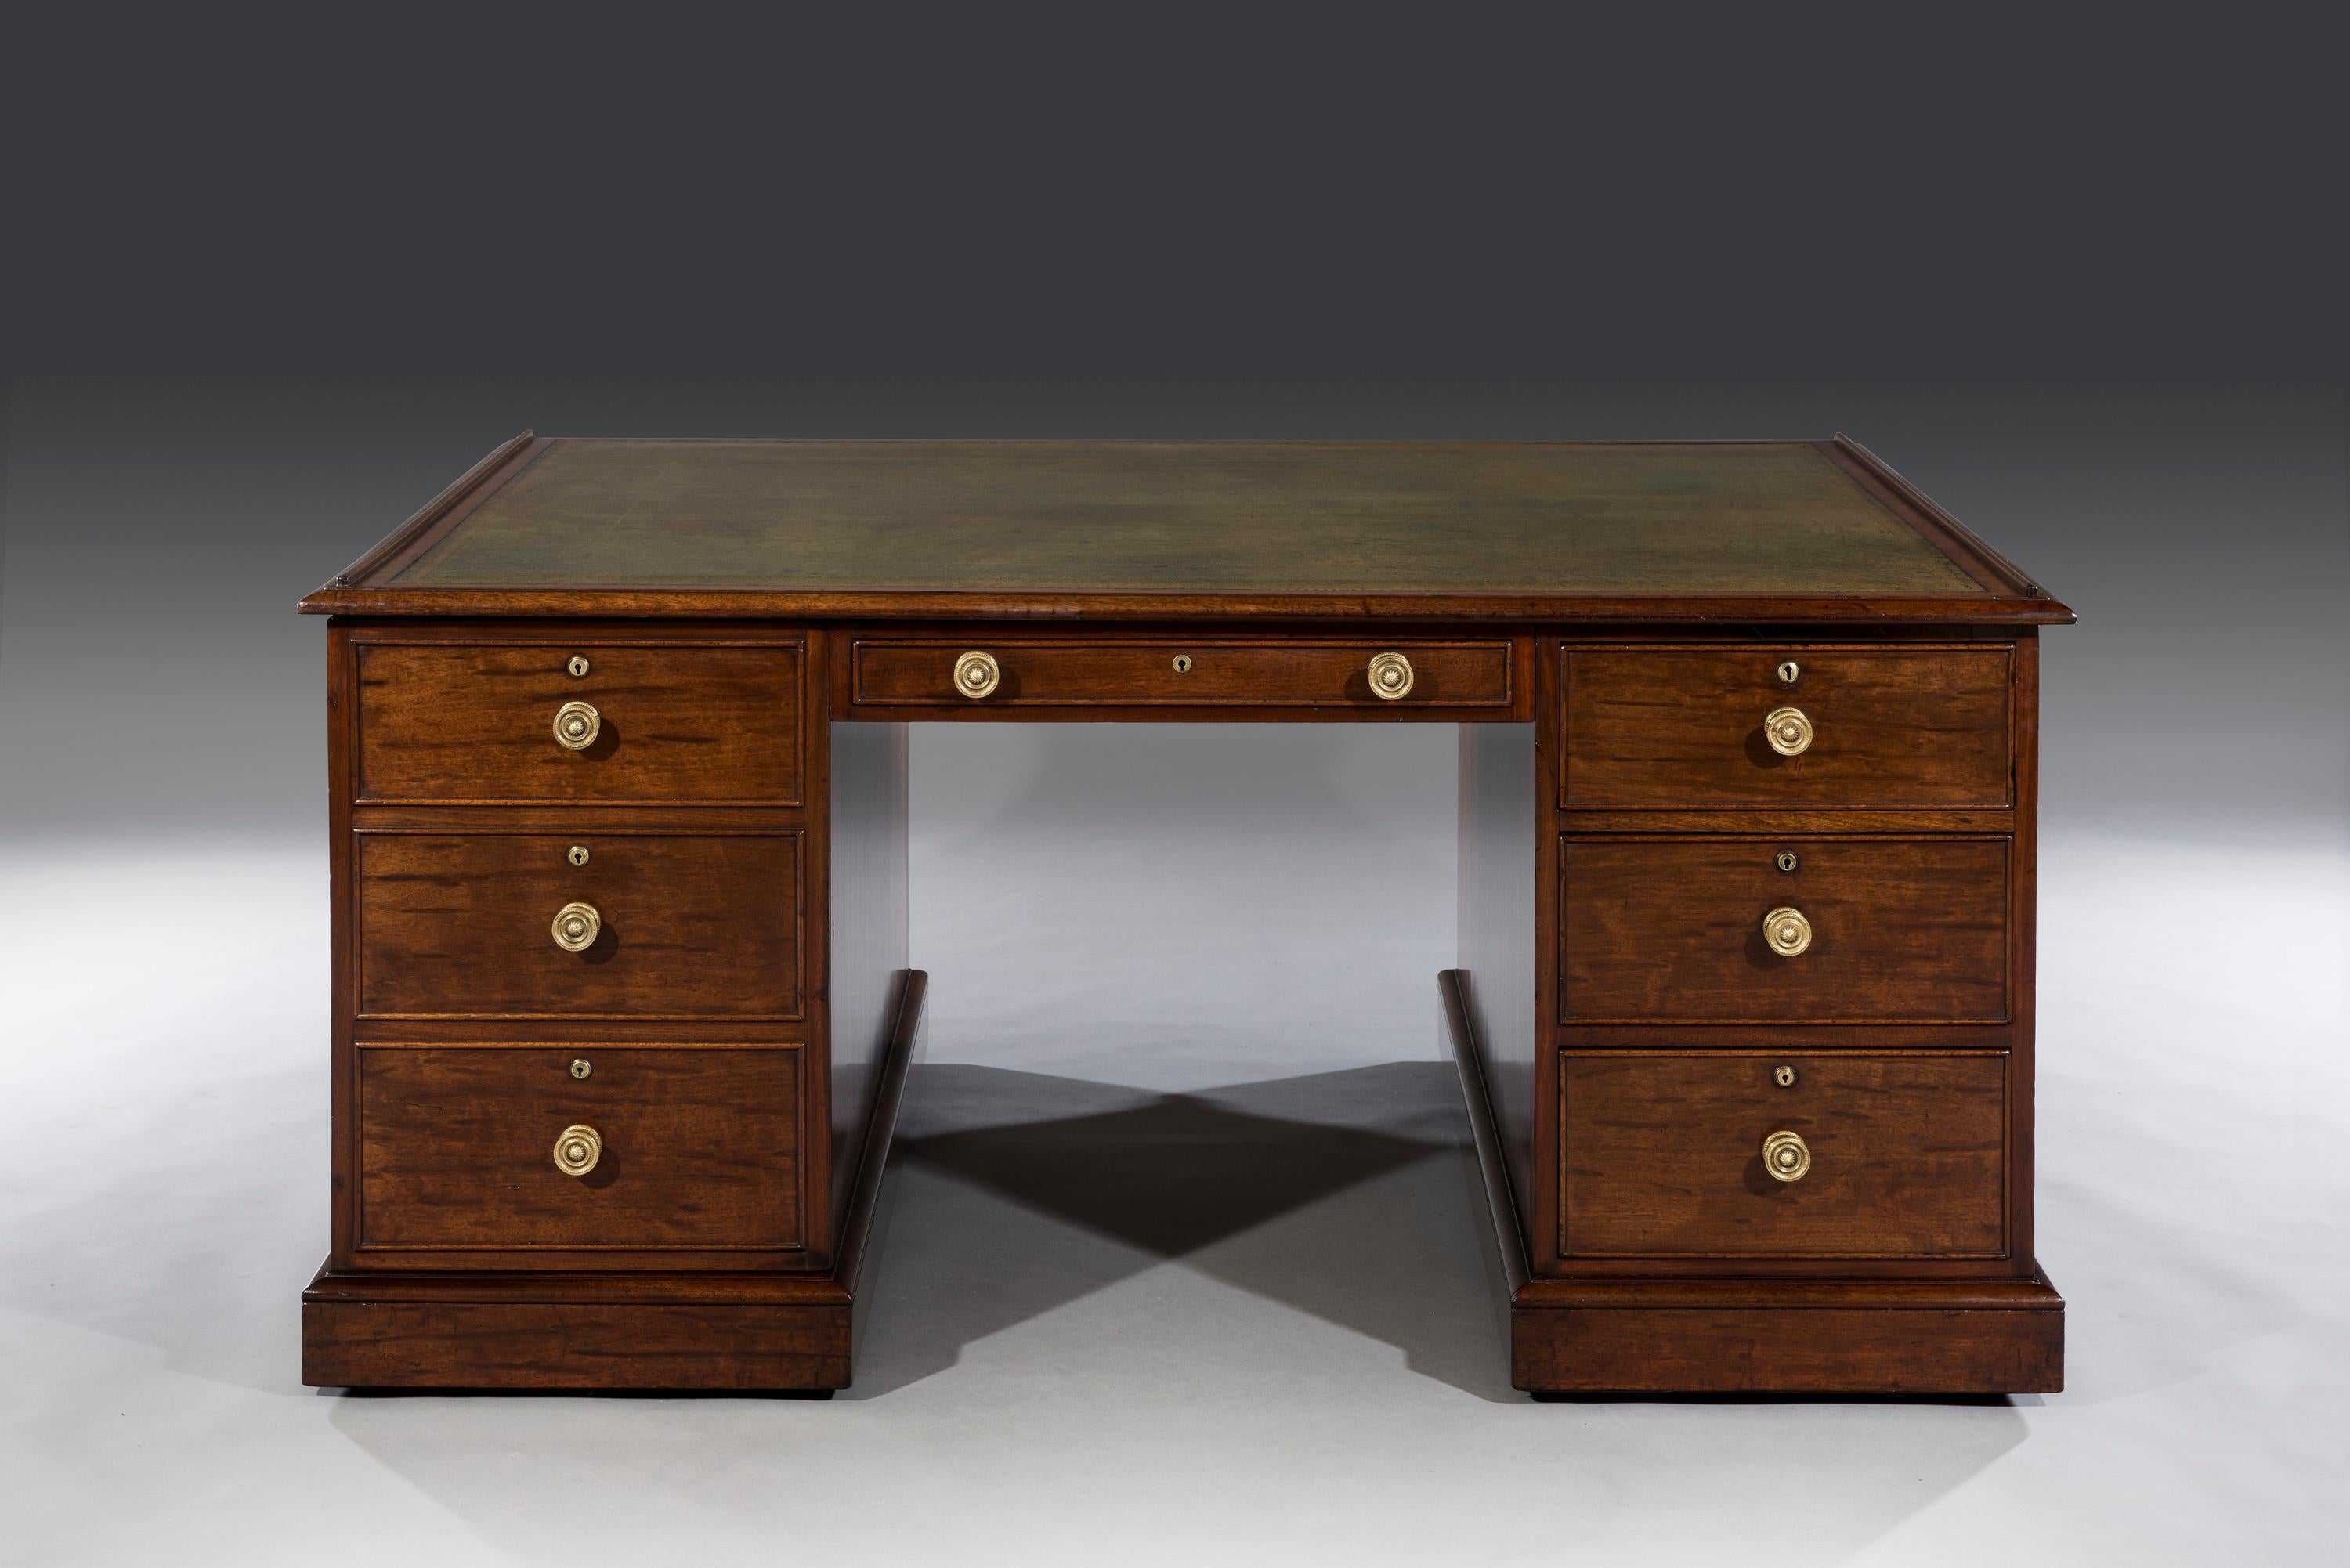 Early 19th century Regency period mahogany partners pedestal desk.